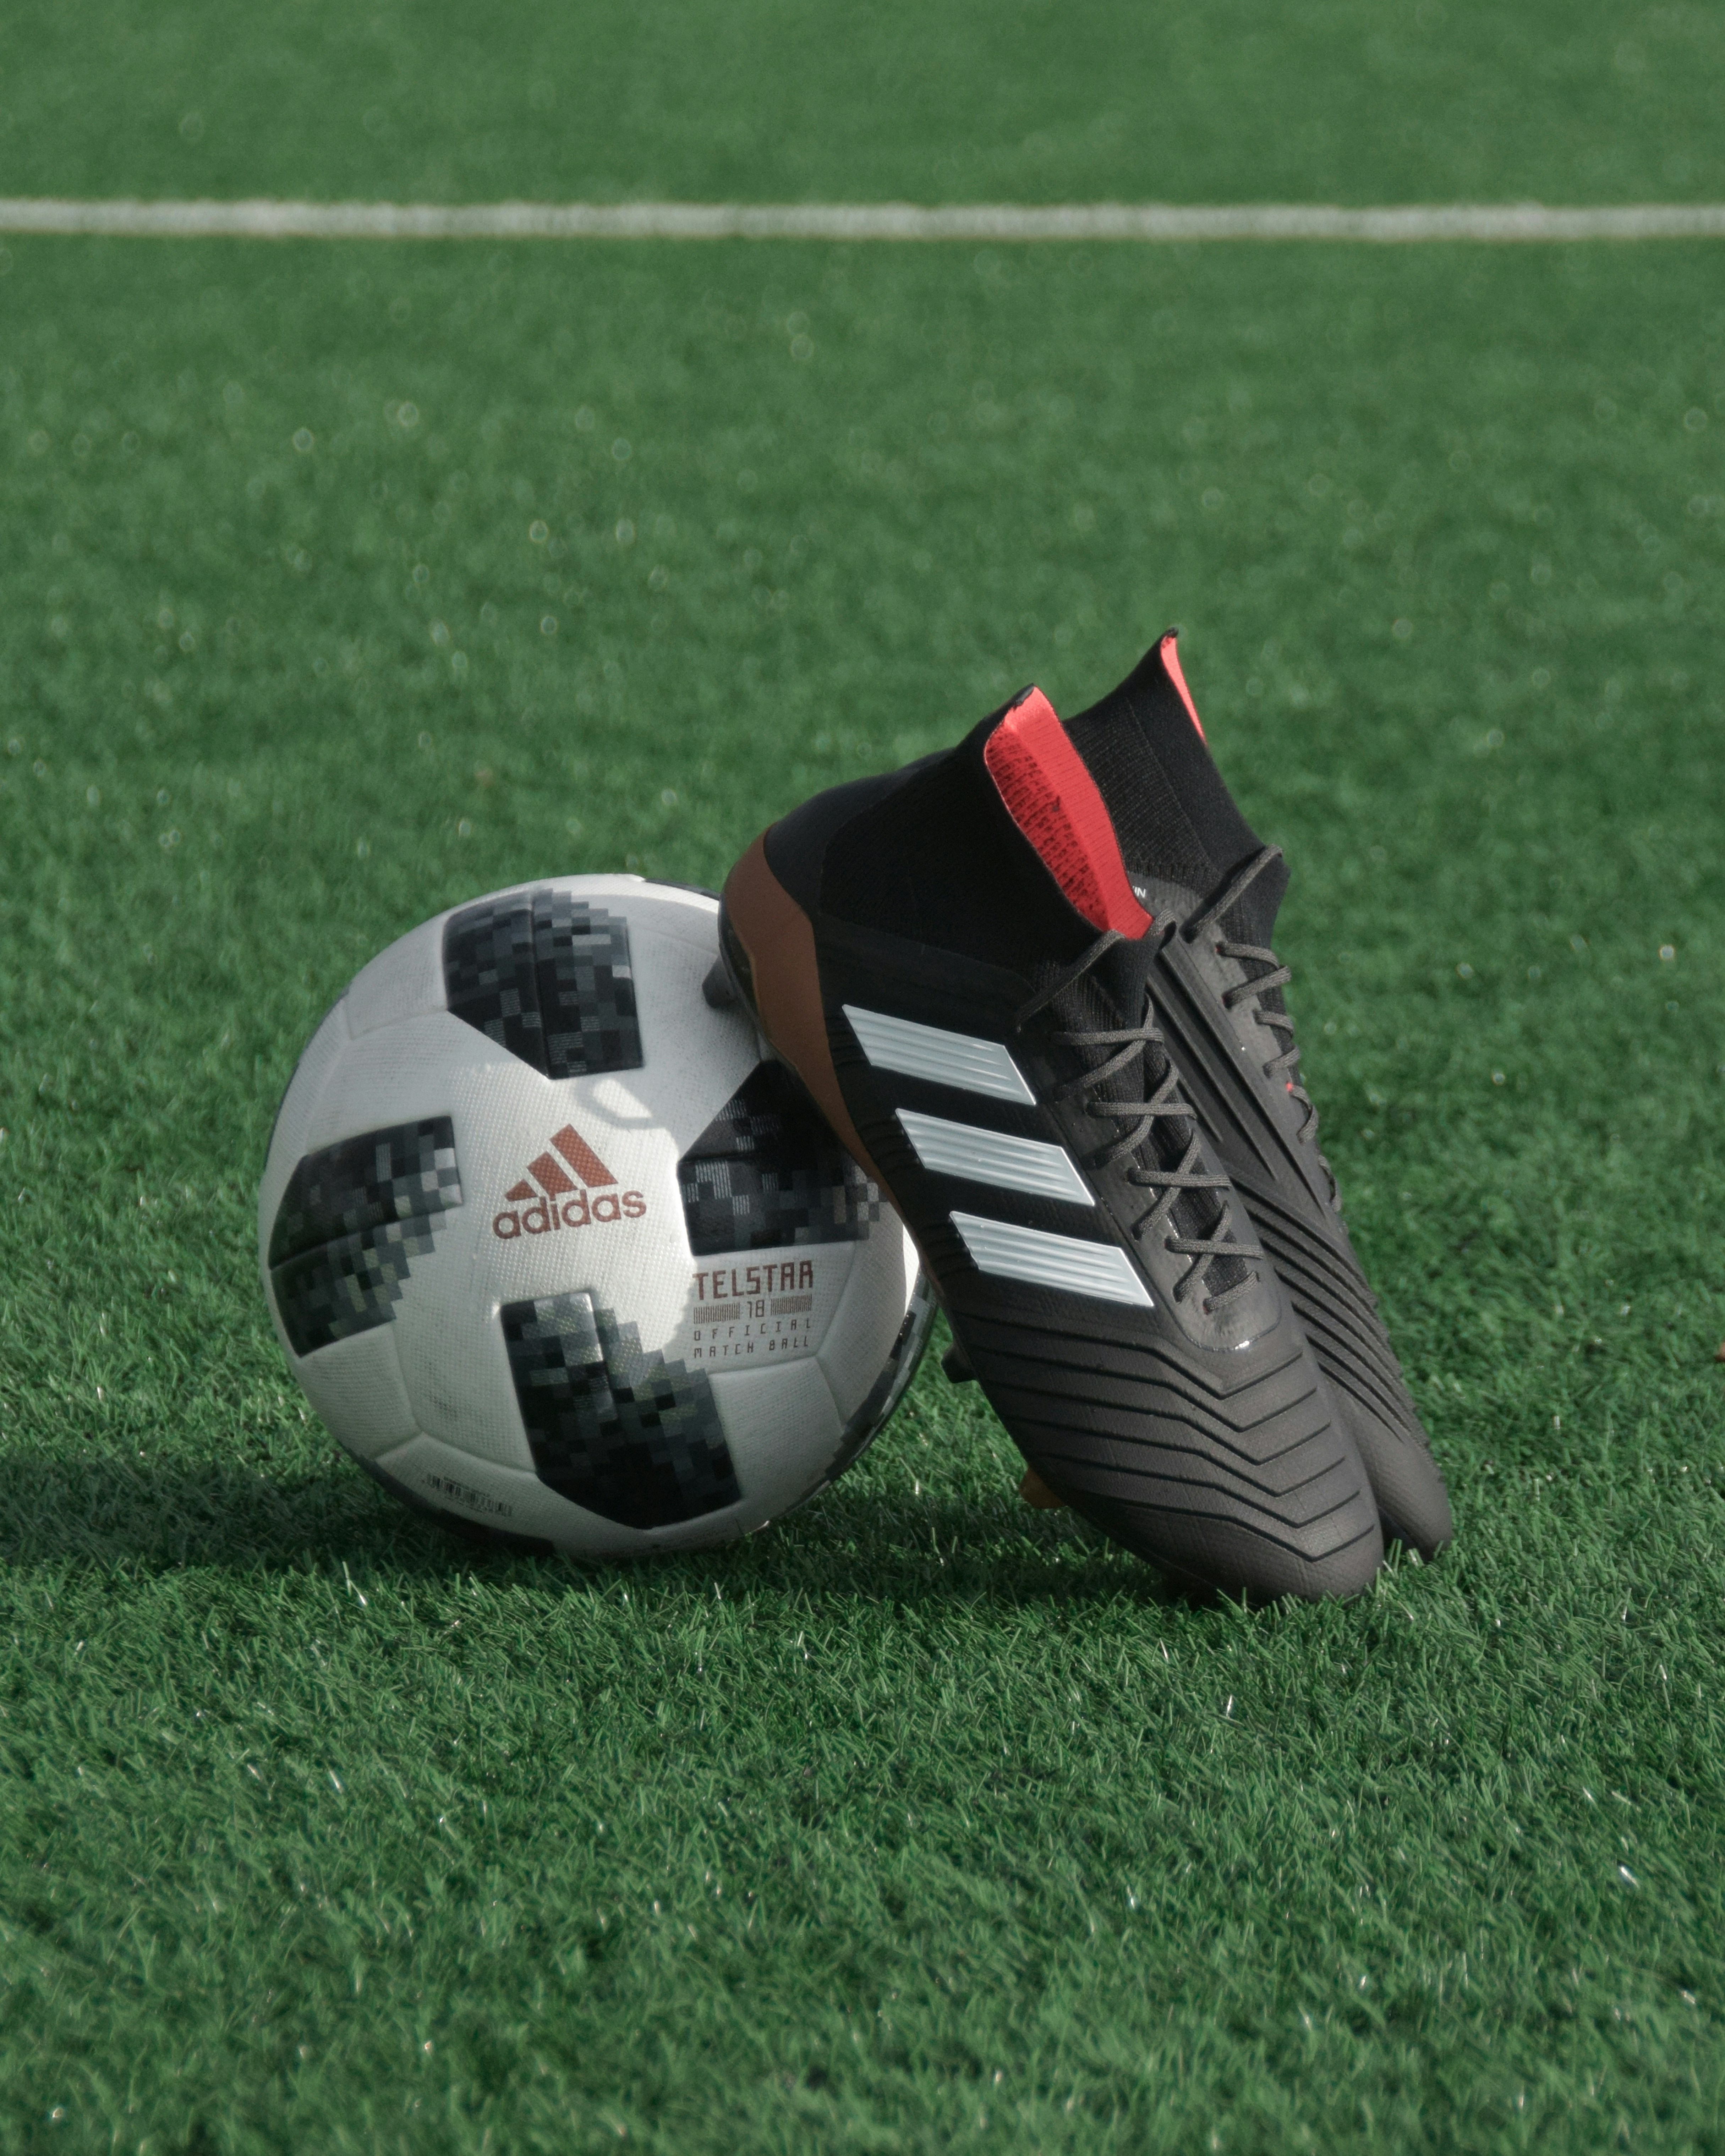 adidas green soccer ball